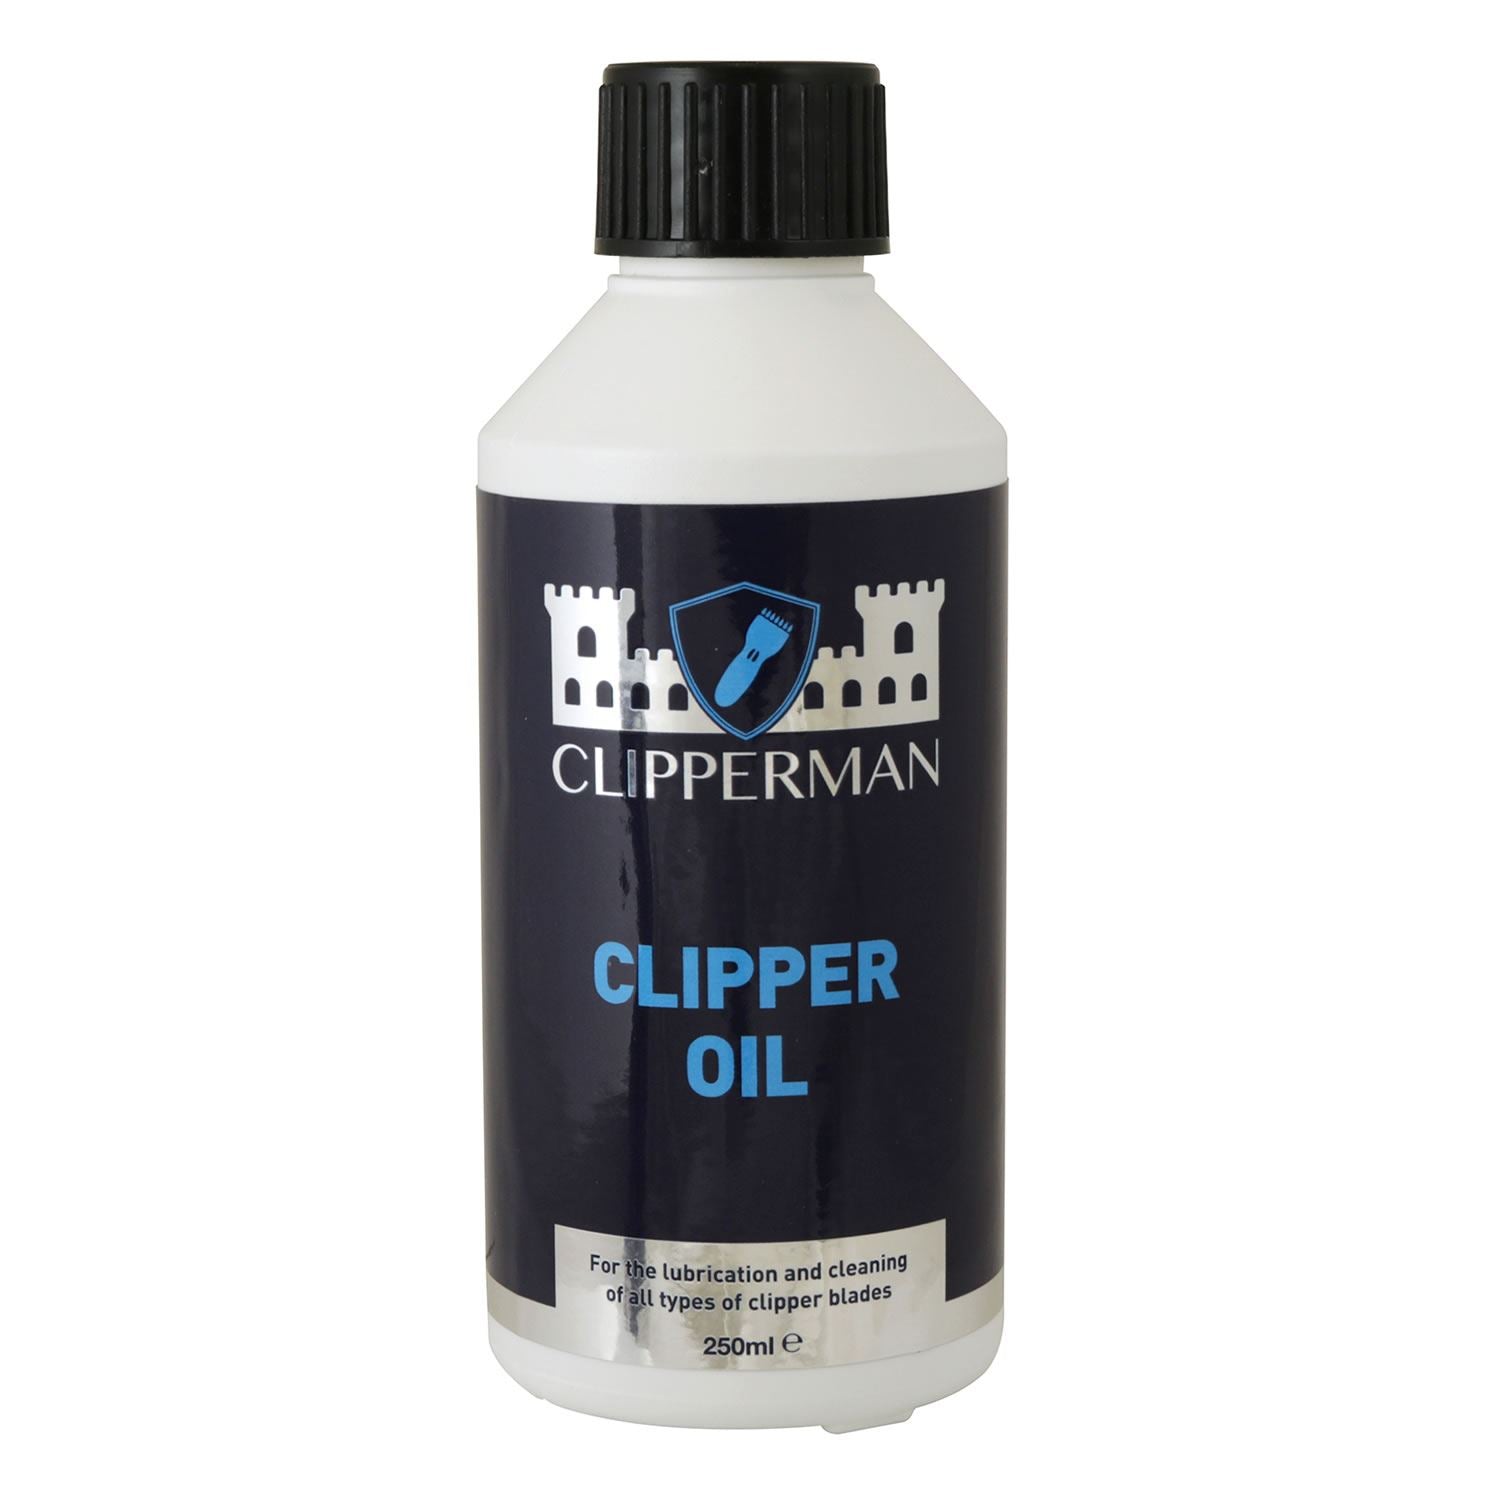 Clipperman Clipper Oil - Just Horse Riders